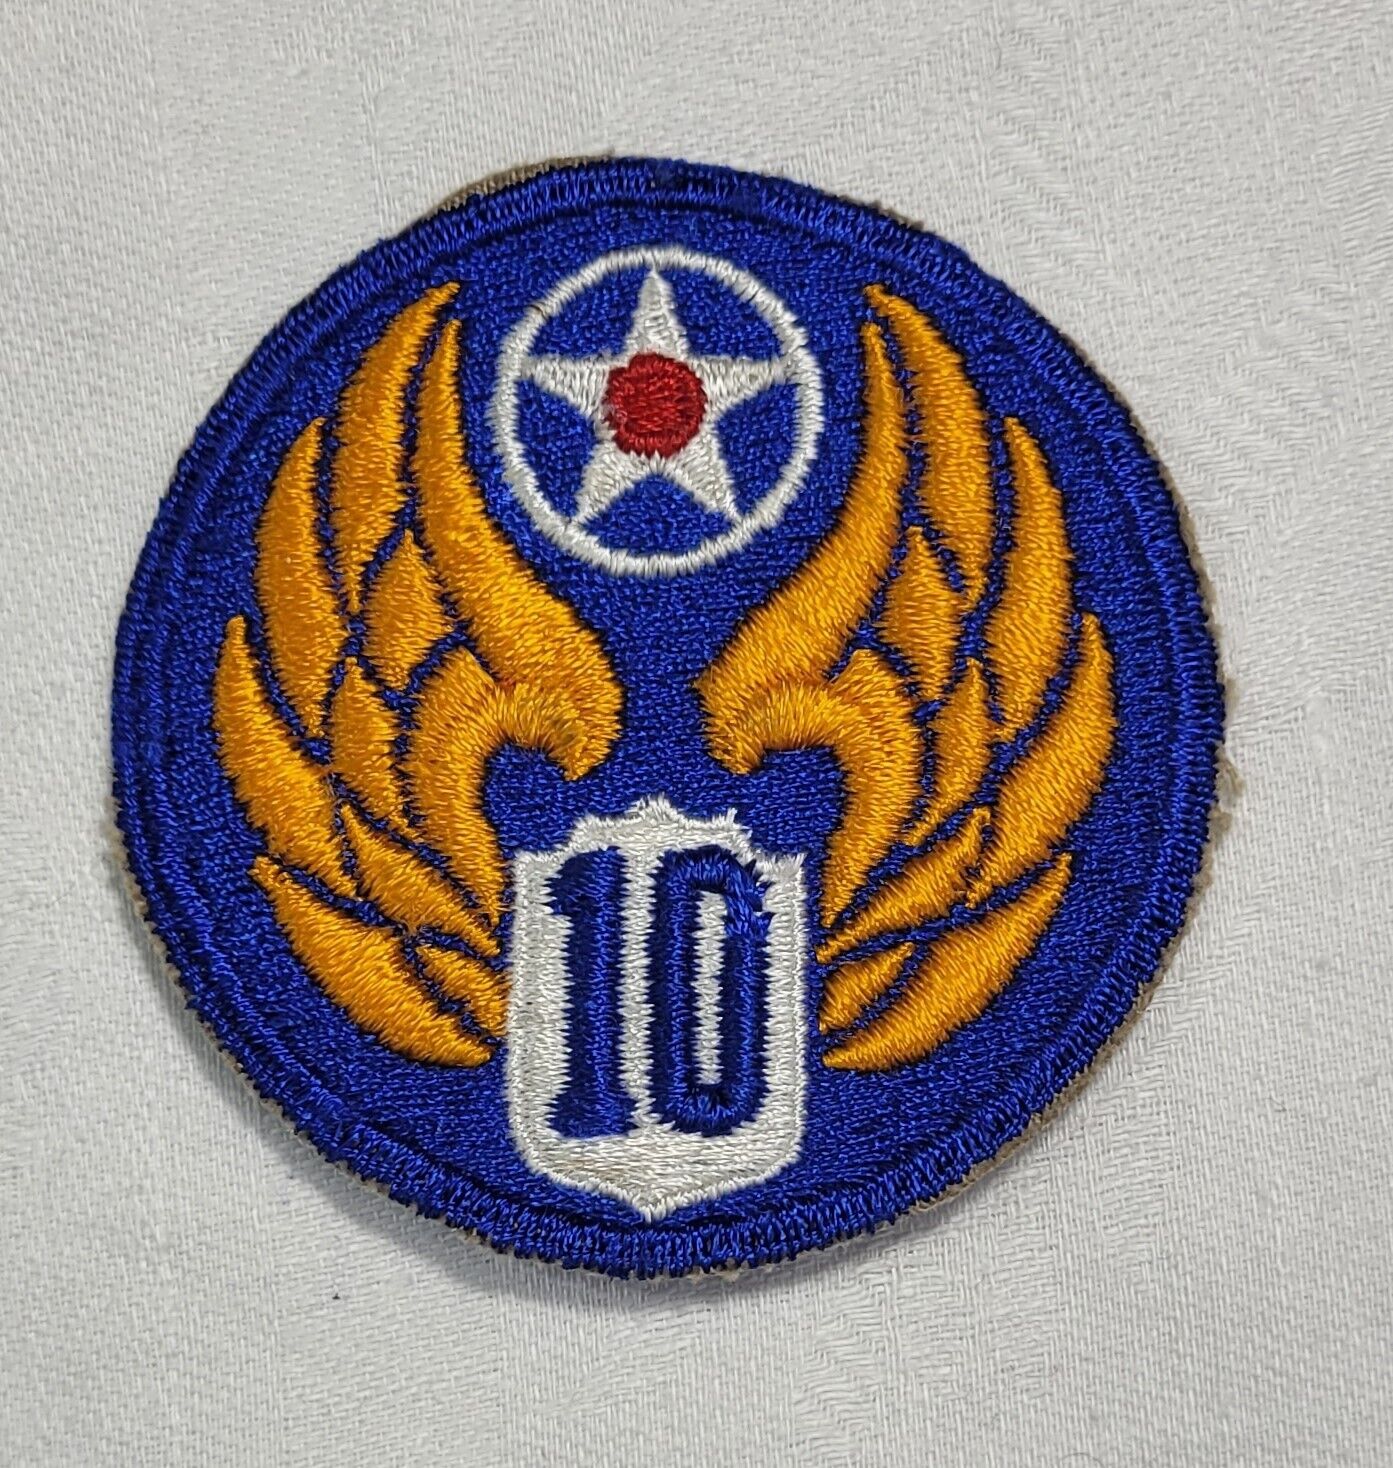 10TH US ARMY AIR FORCE USAAF WWII/WW2 PATCH - CLOTH BACK/CUT KHAKI EDGE/NO GLOW